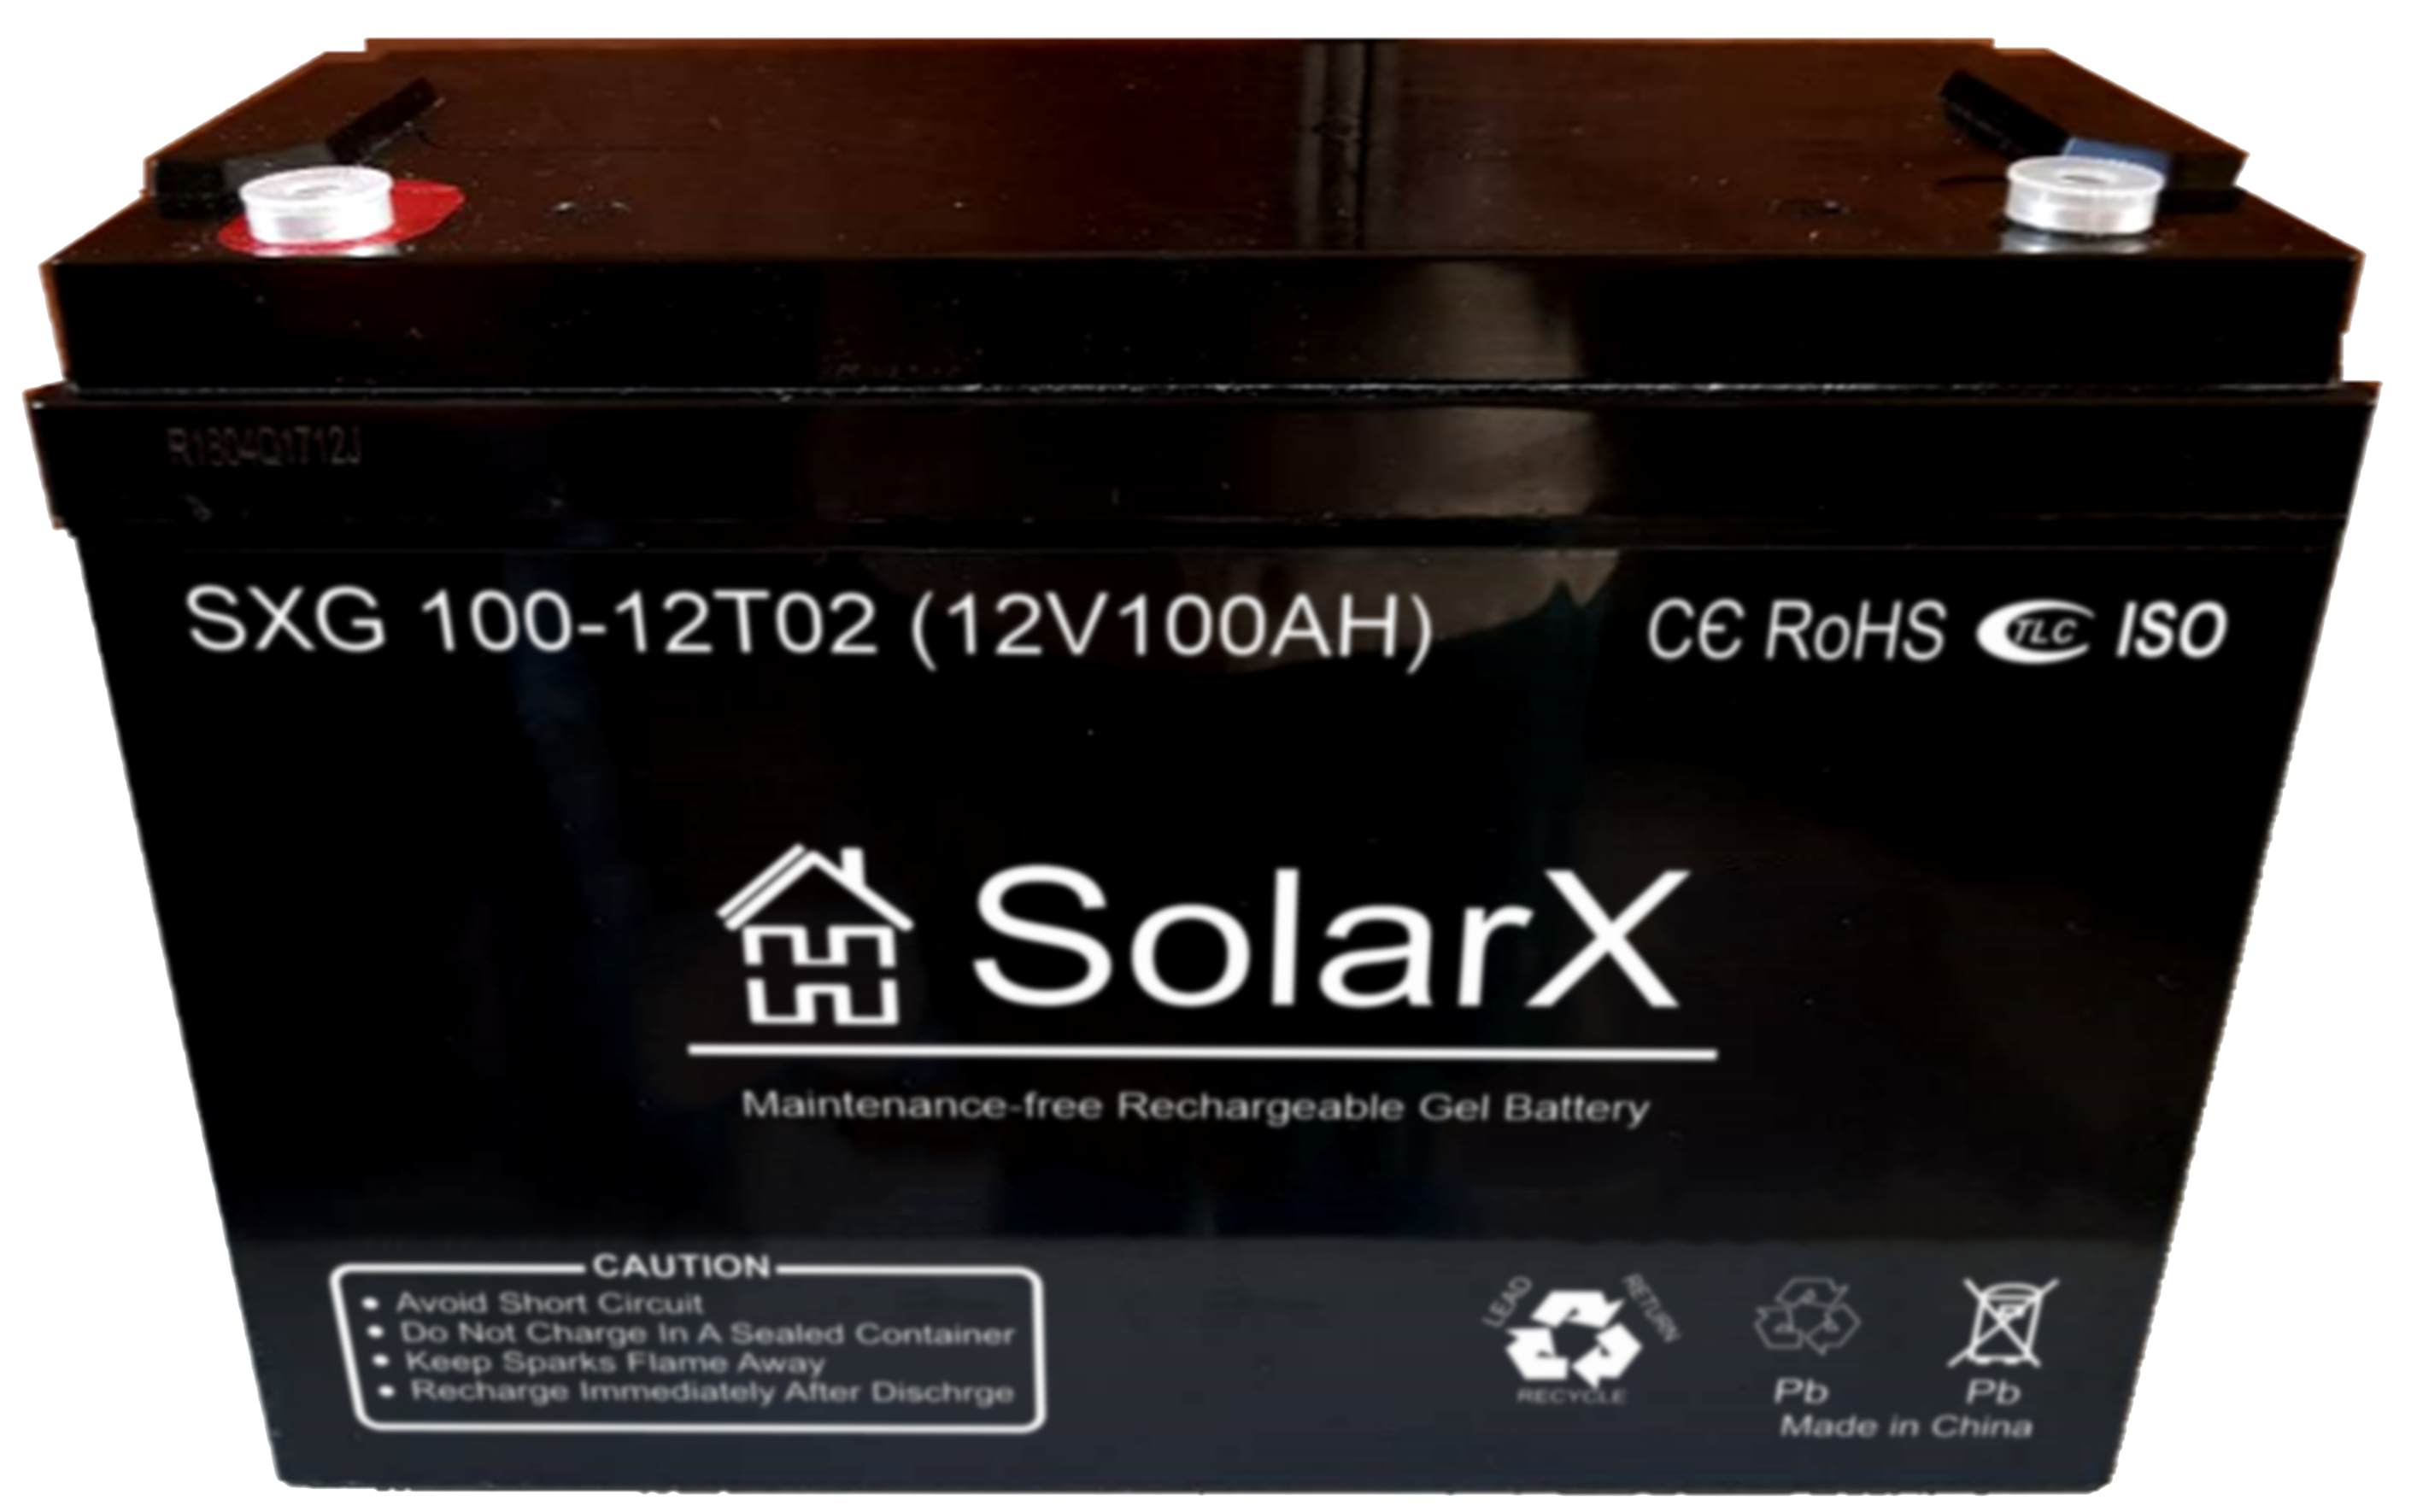 Solarx sxg 100 12t02